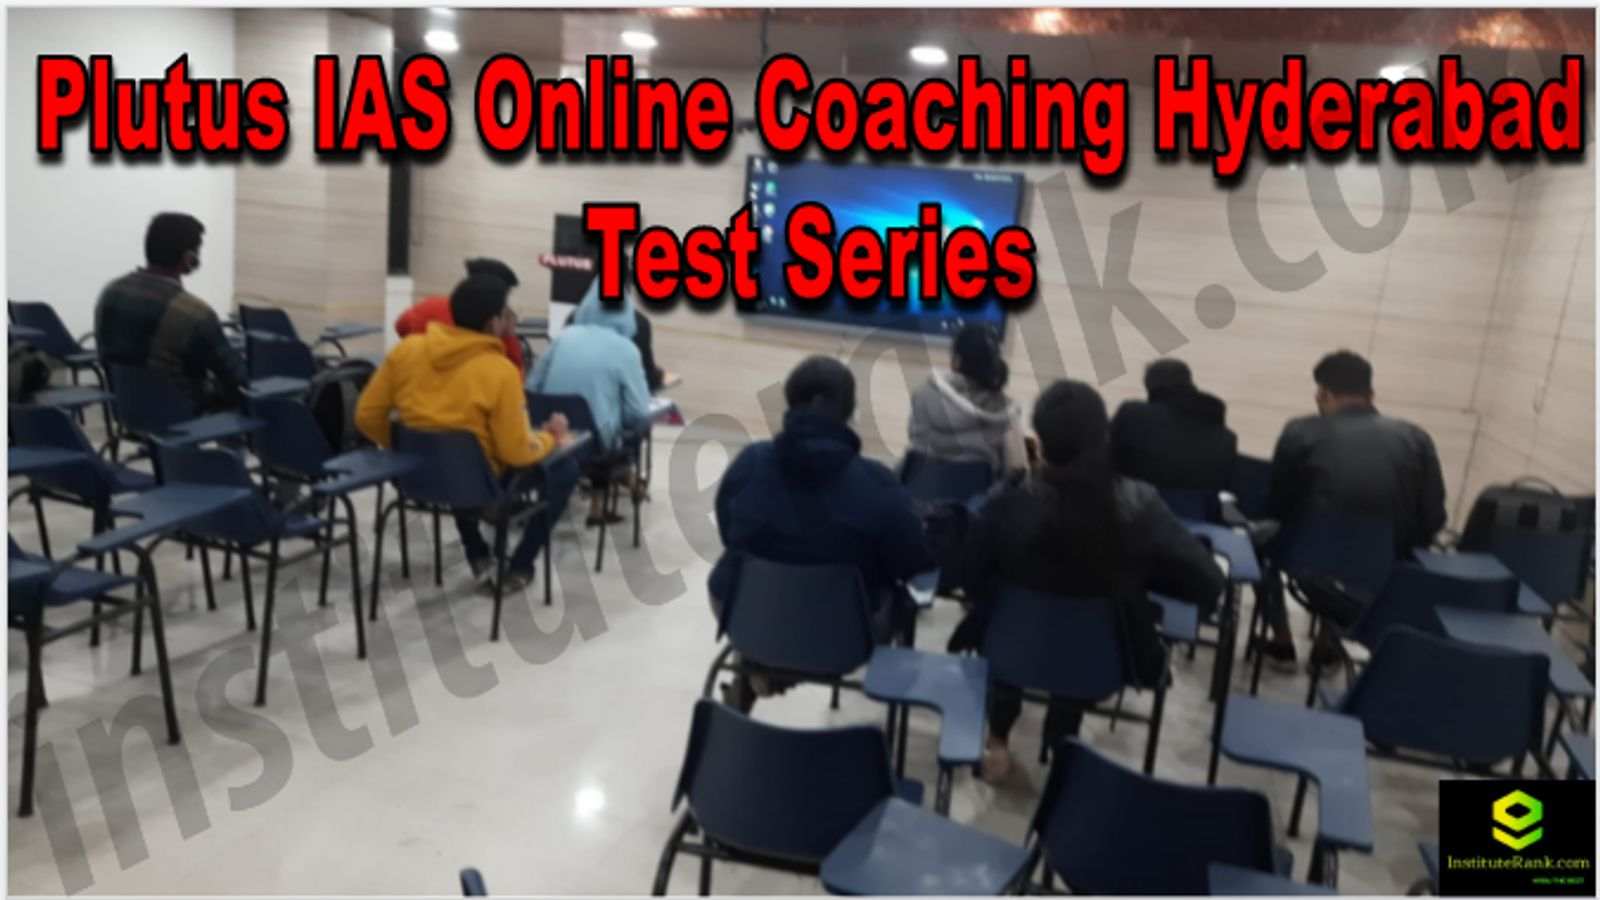 Plutus IAS Online Coaching Hyderabad Reviews Test Series